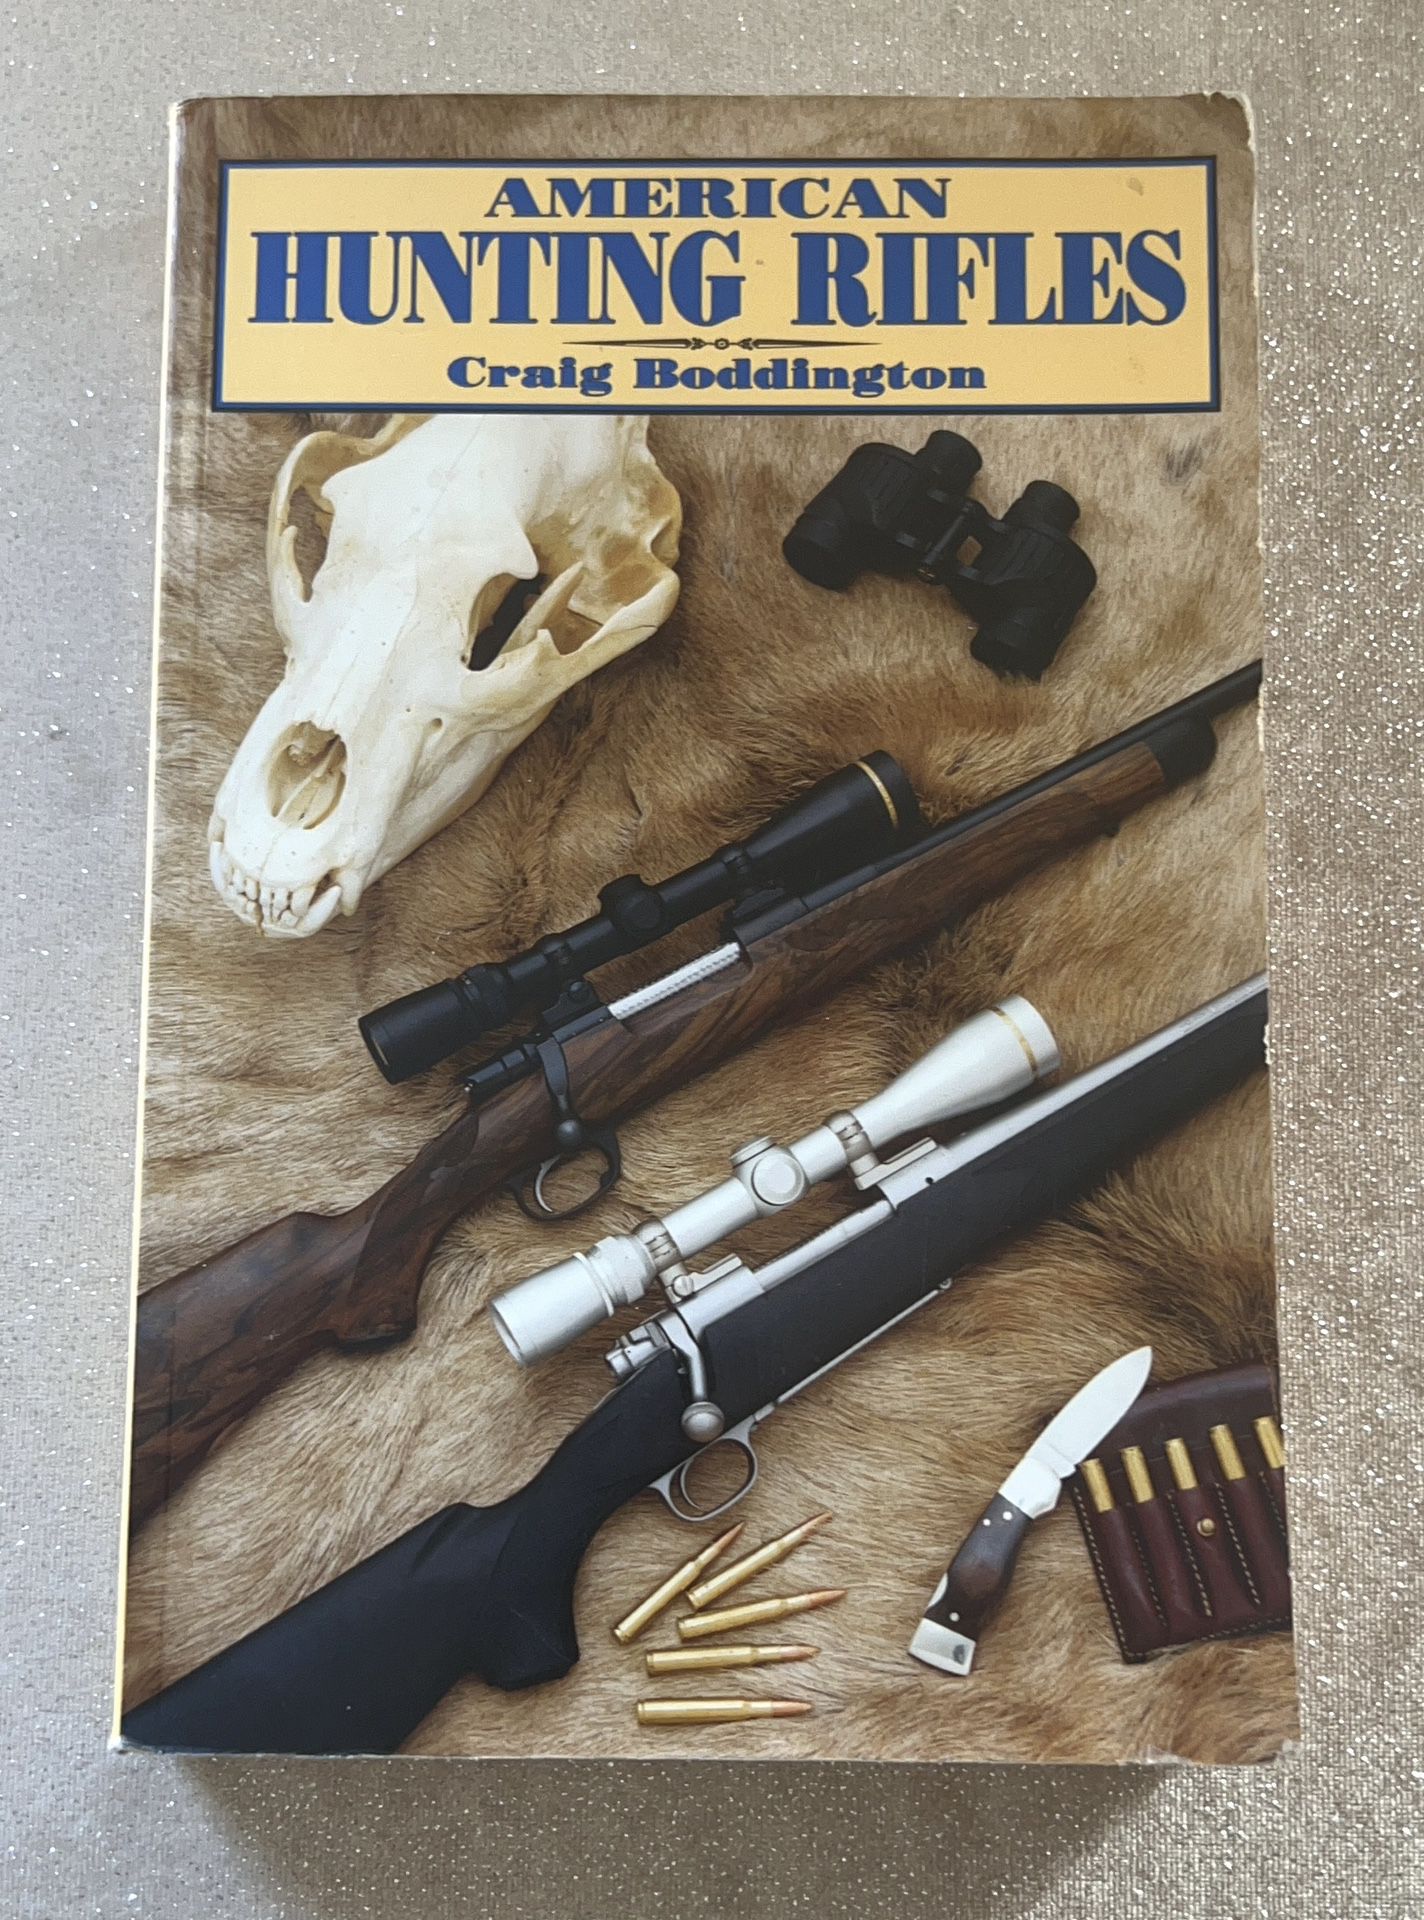 American Hunting Rifles by Craig Boddington